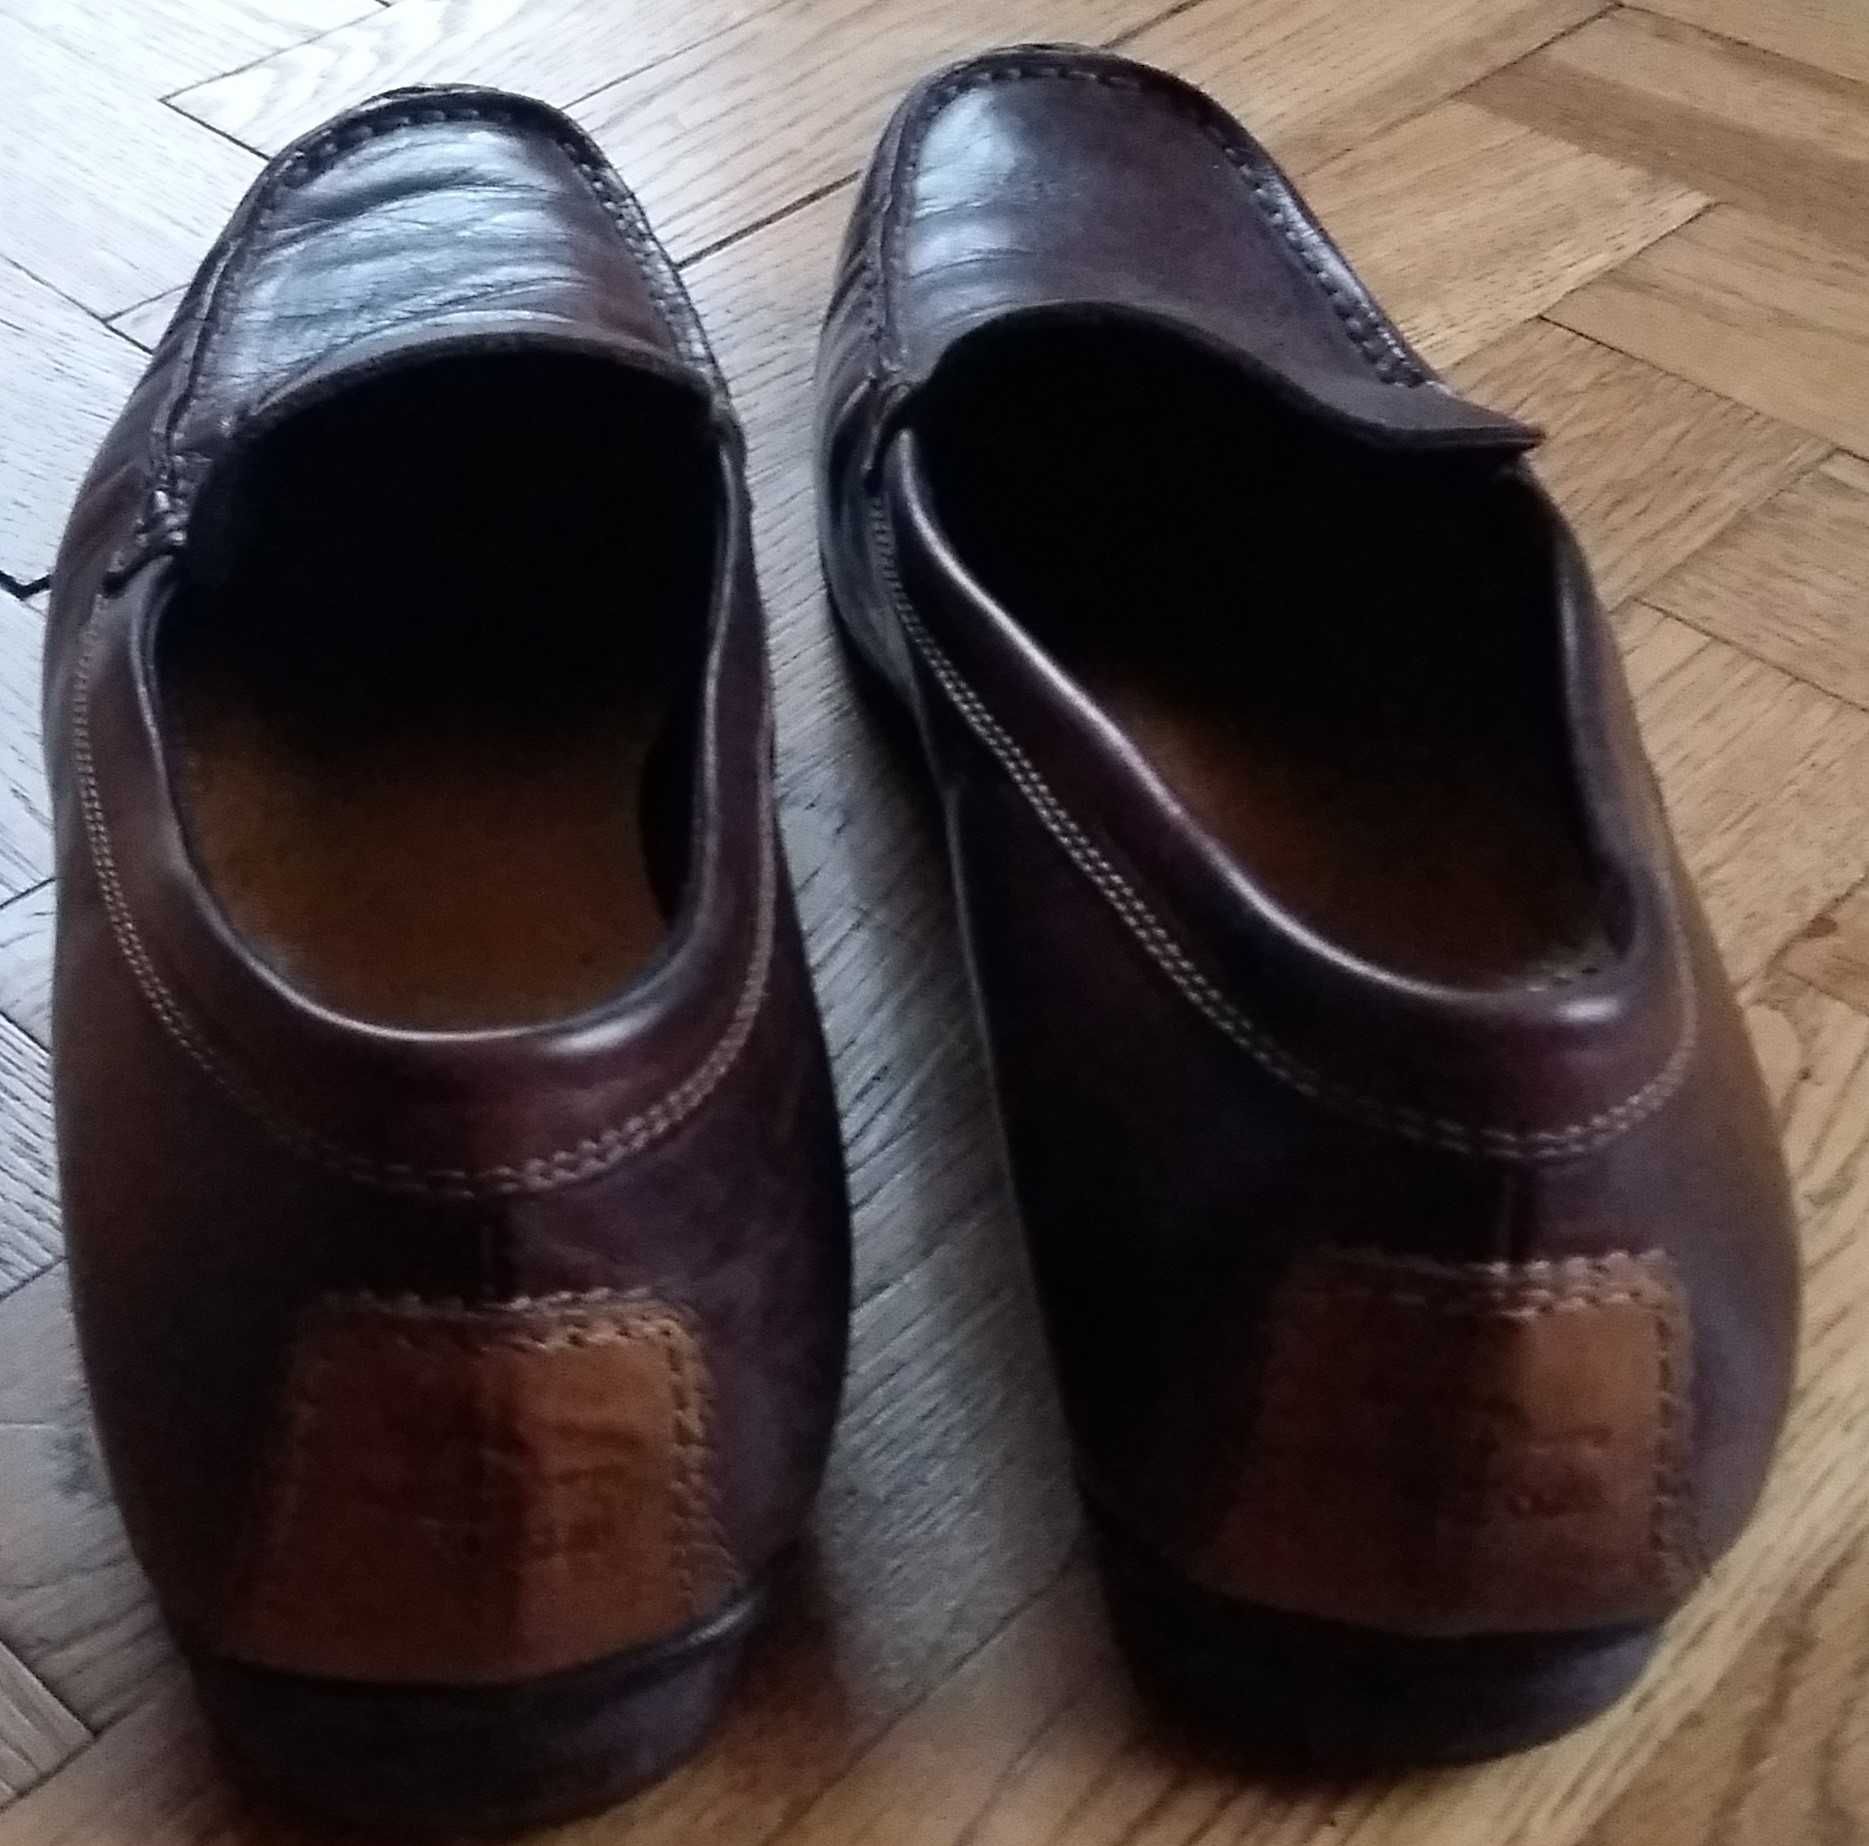 Buty pantofle włoskie VERRA GOMMA skóra naturalna rozmiar 38,5